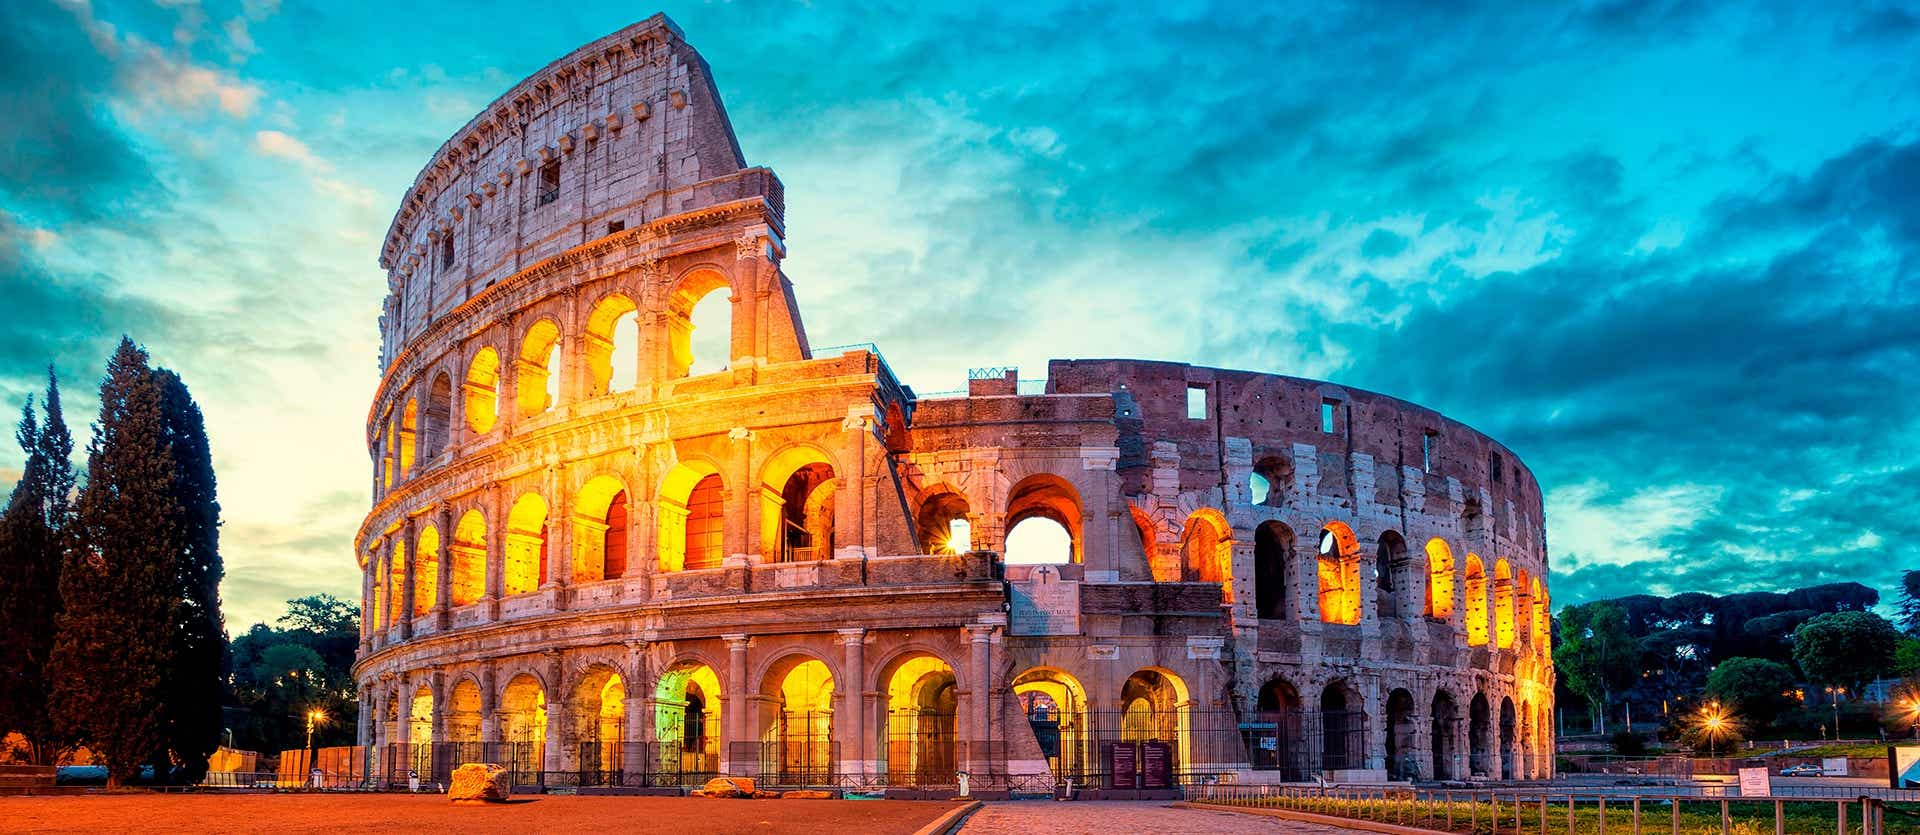 The Colosseum <span class="iconos separador"></span> Rome